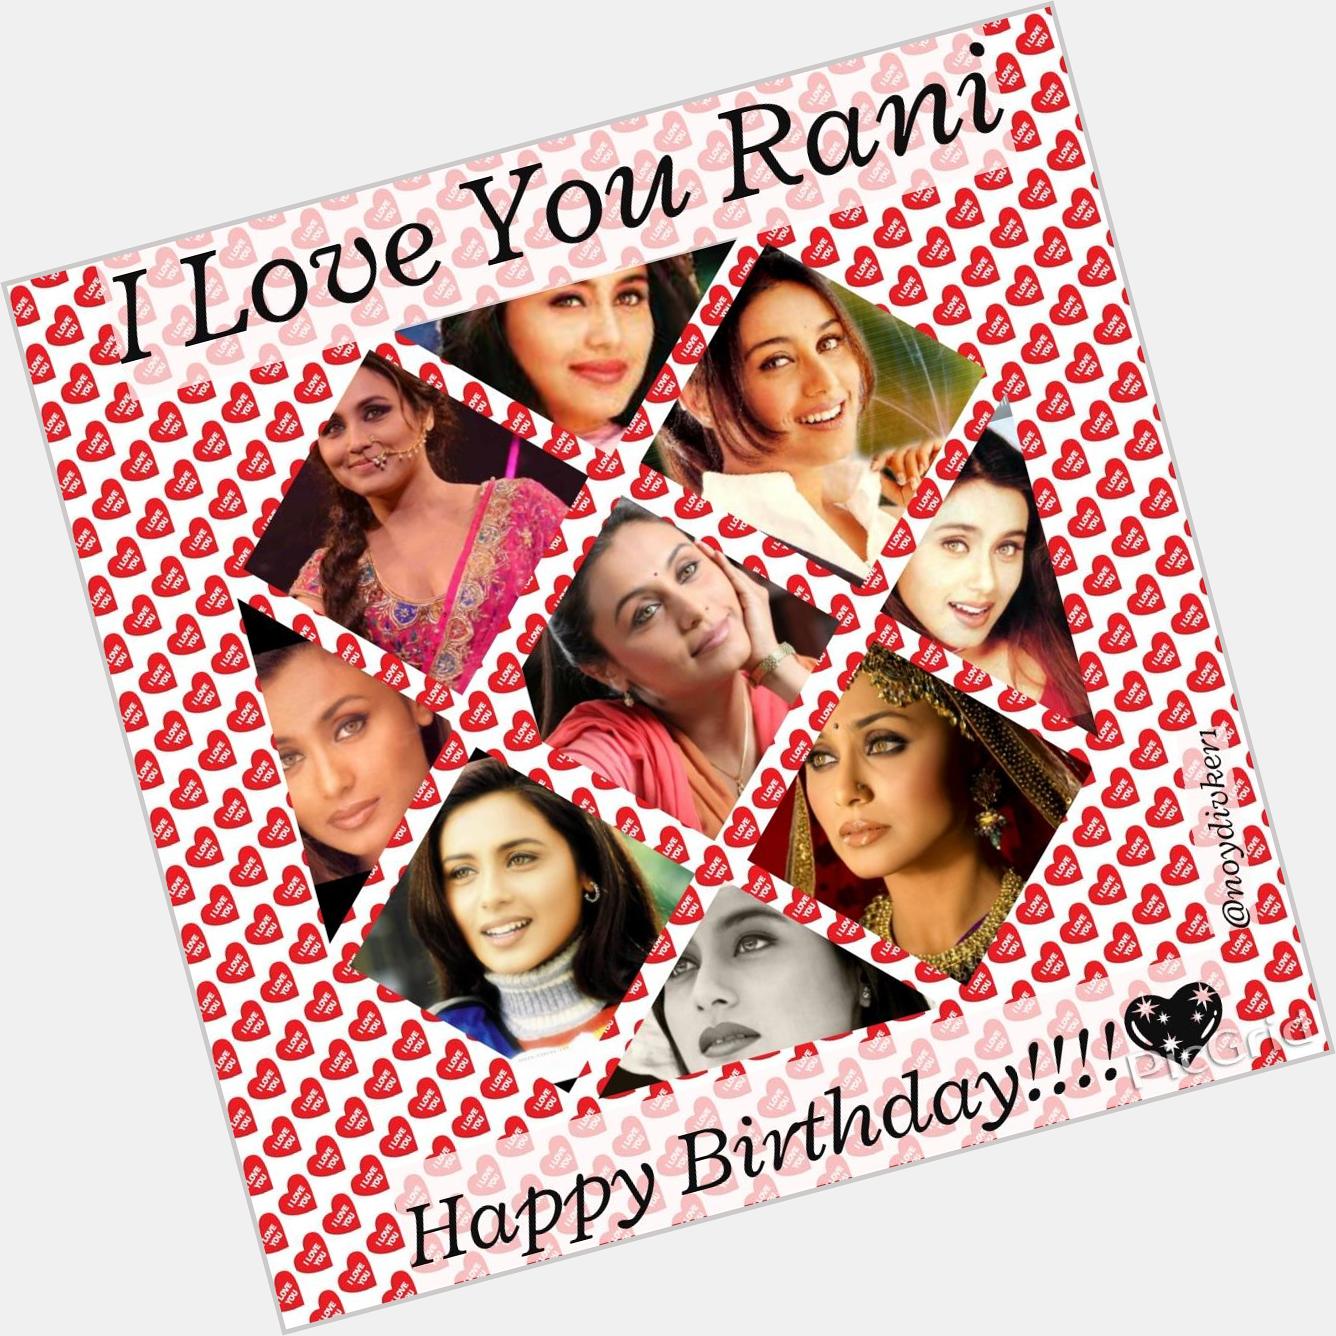  Happy birthday for the only one Rani mukerji chopra 
I LOVE YOU      